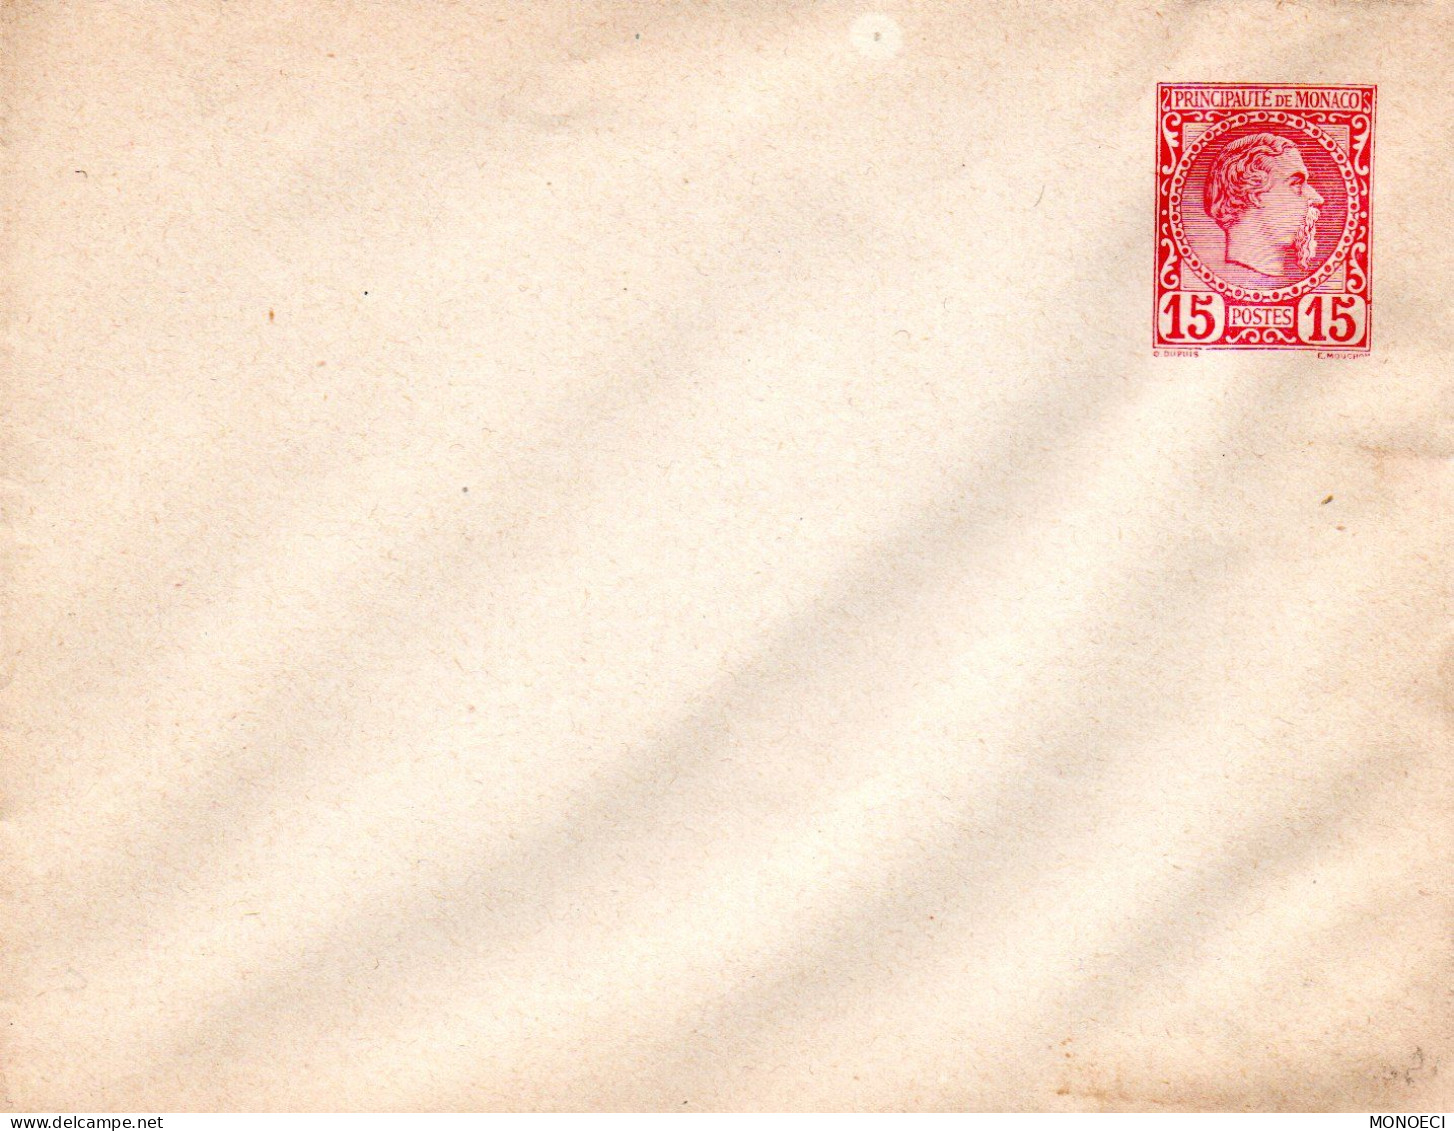 MONACO -- MONTE CARLO -- ENTIER POSTAL -- Enveloppe -- 15 C. (1886) (123 X 96) Prince Charles III - Entiers Postaux